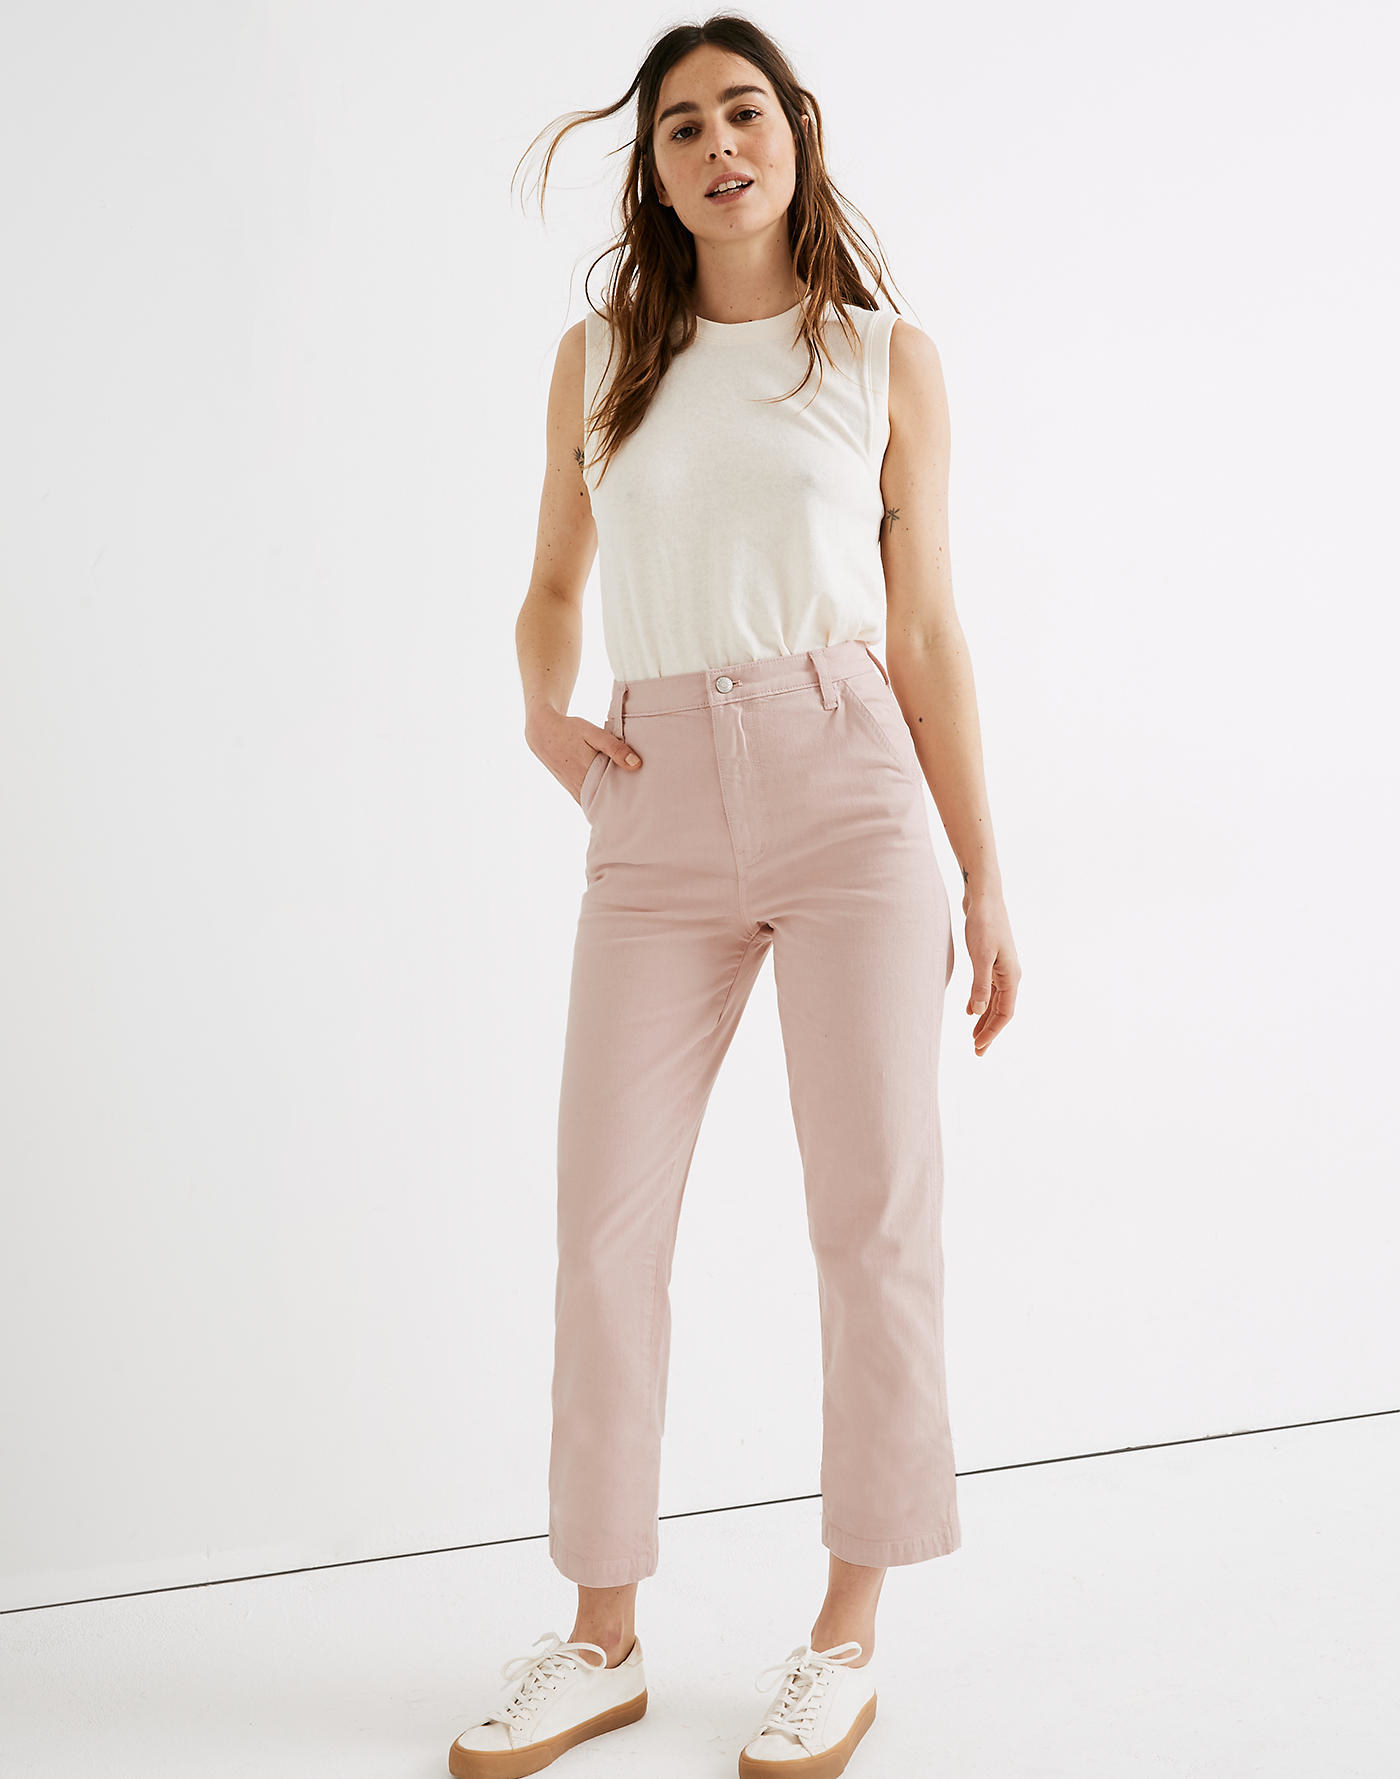 Model wearing pink pants